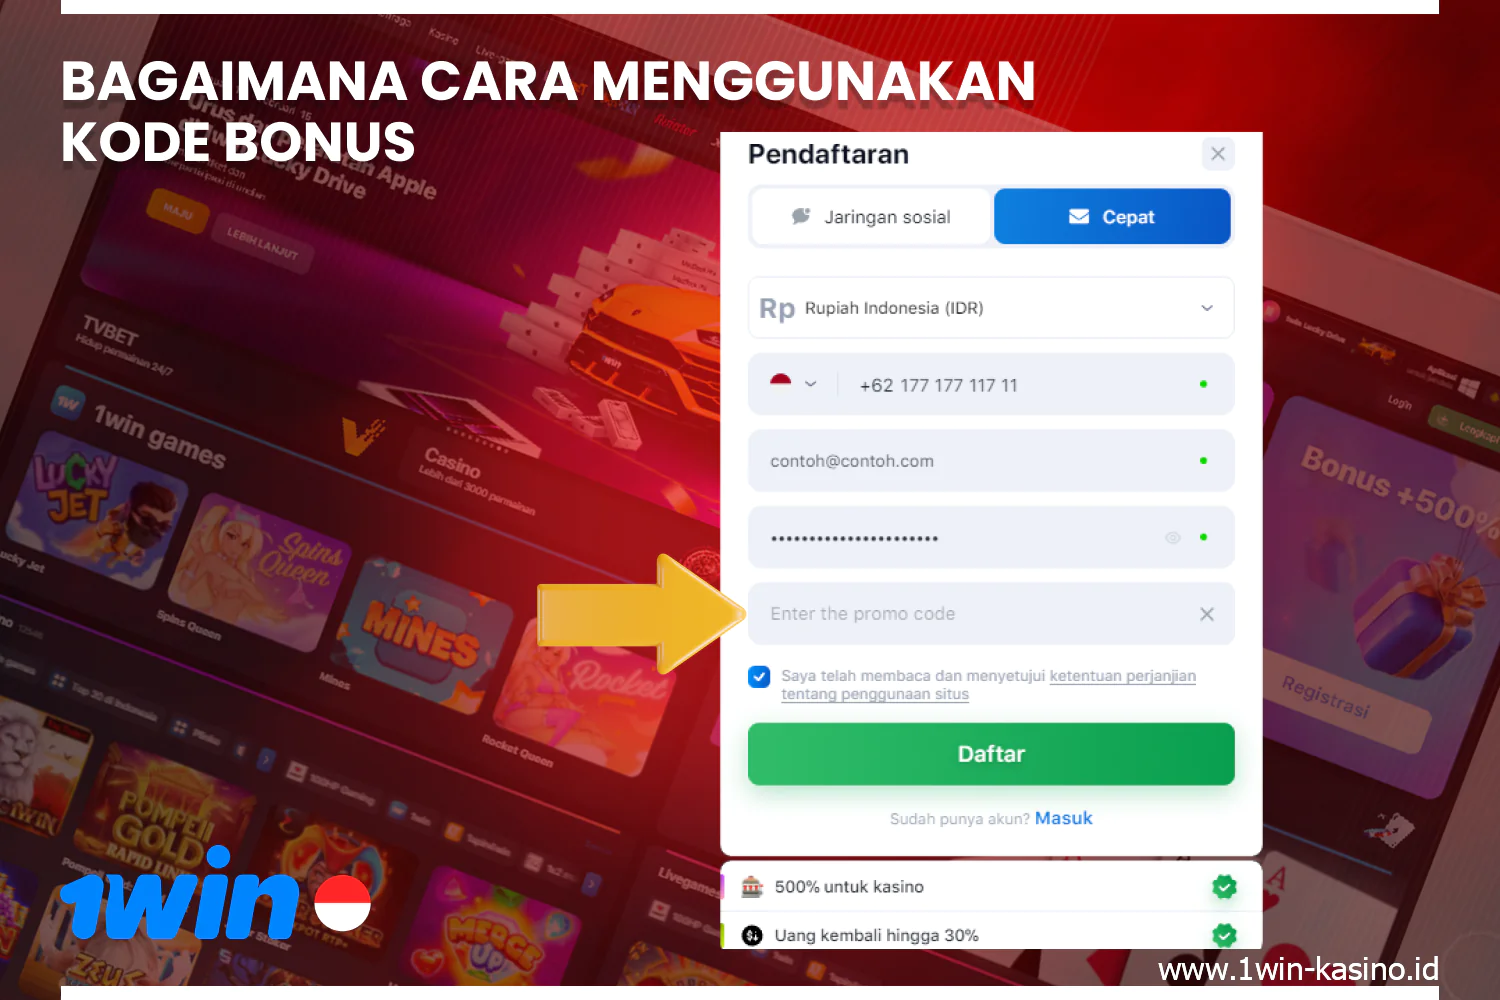 Pengguna baru 1win dari Indonesia dapat mengaktifkan kode promo dan mendapatkan bonus menarik